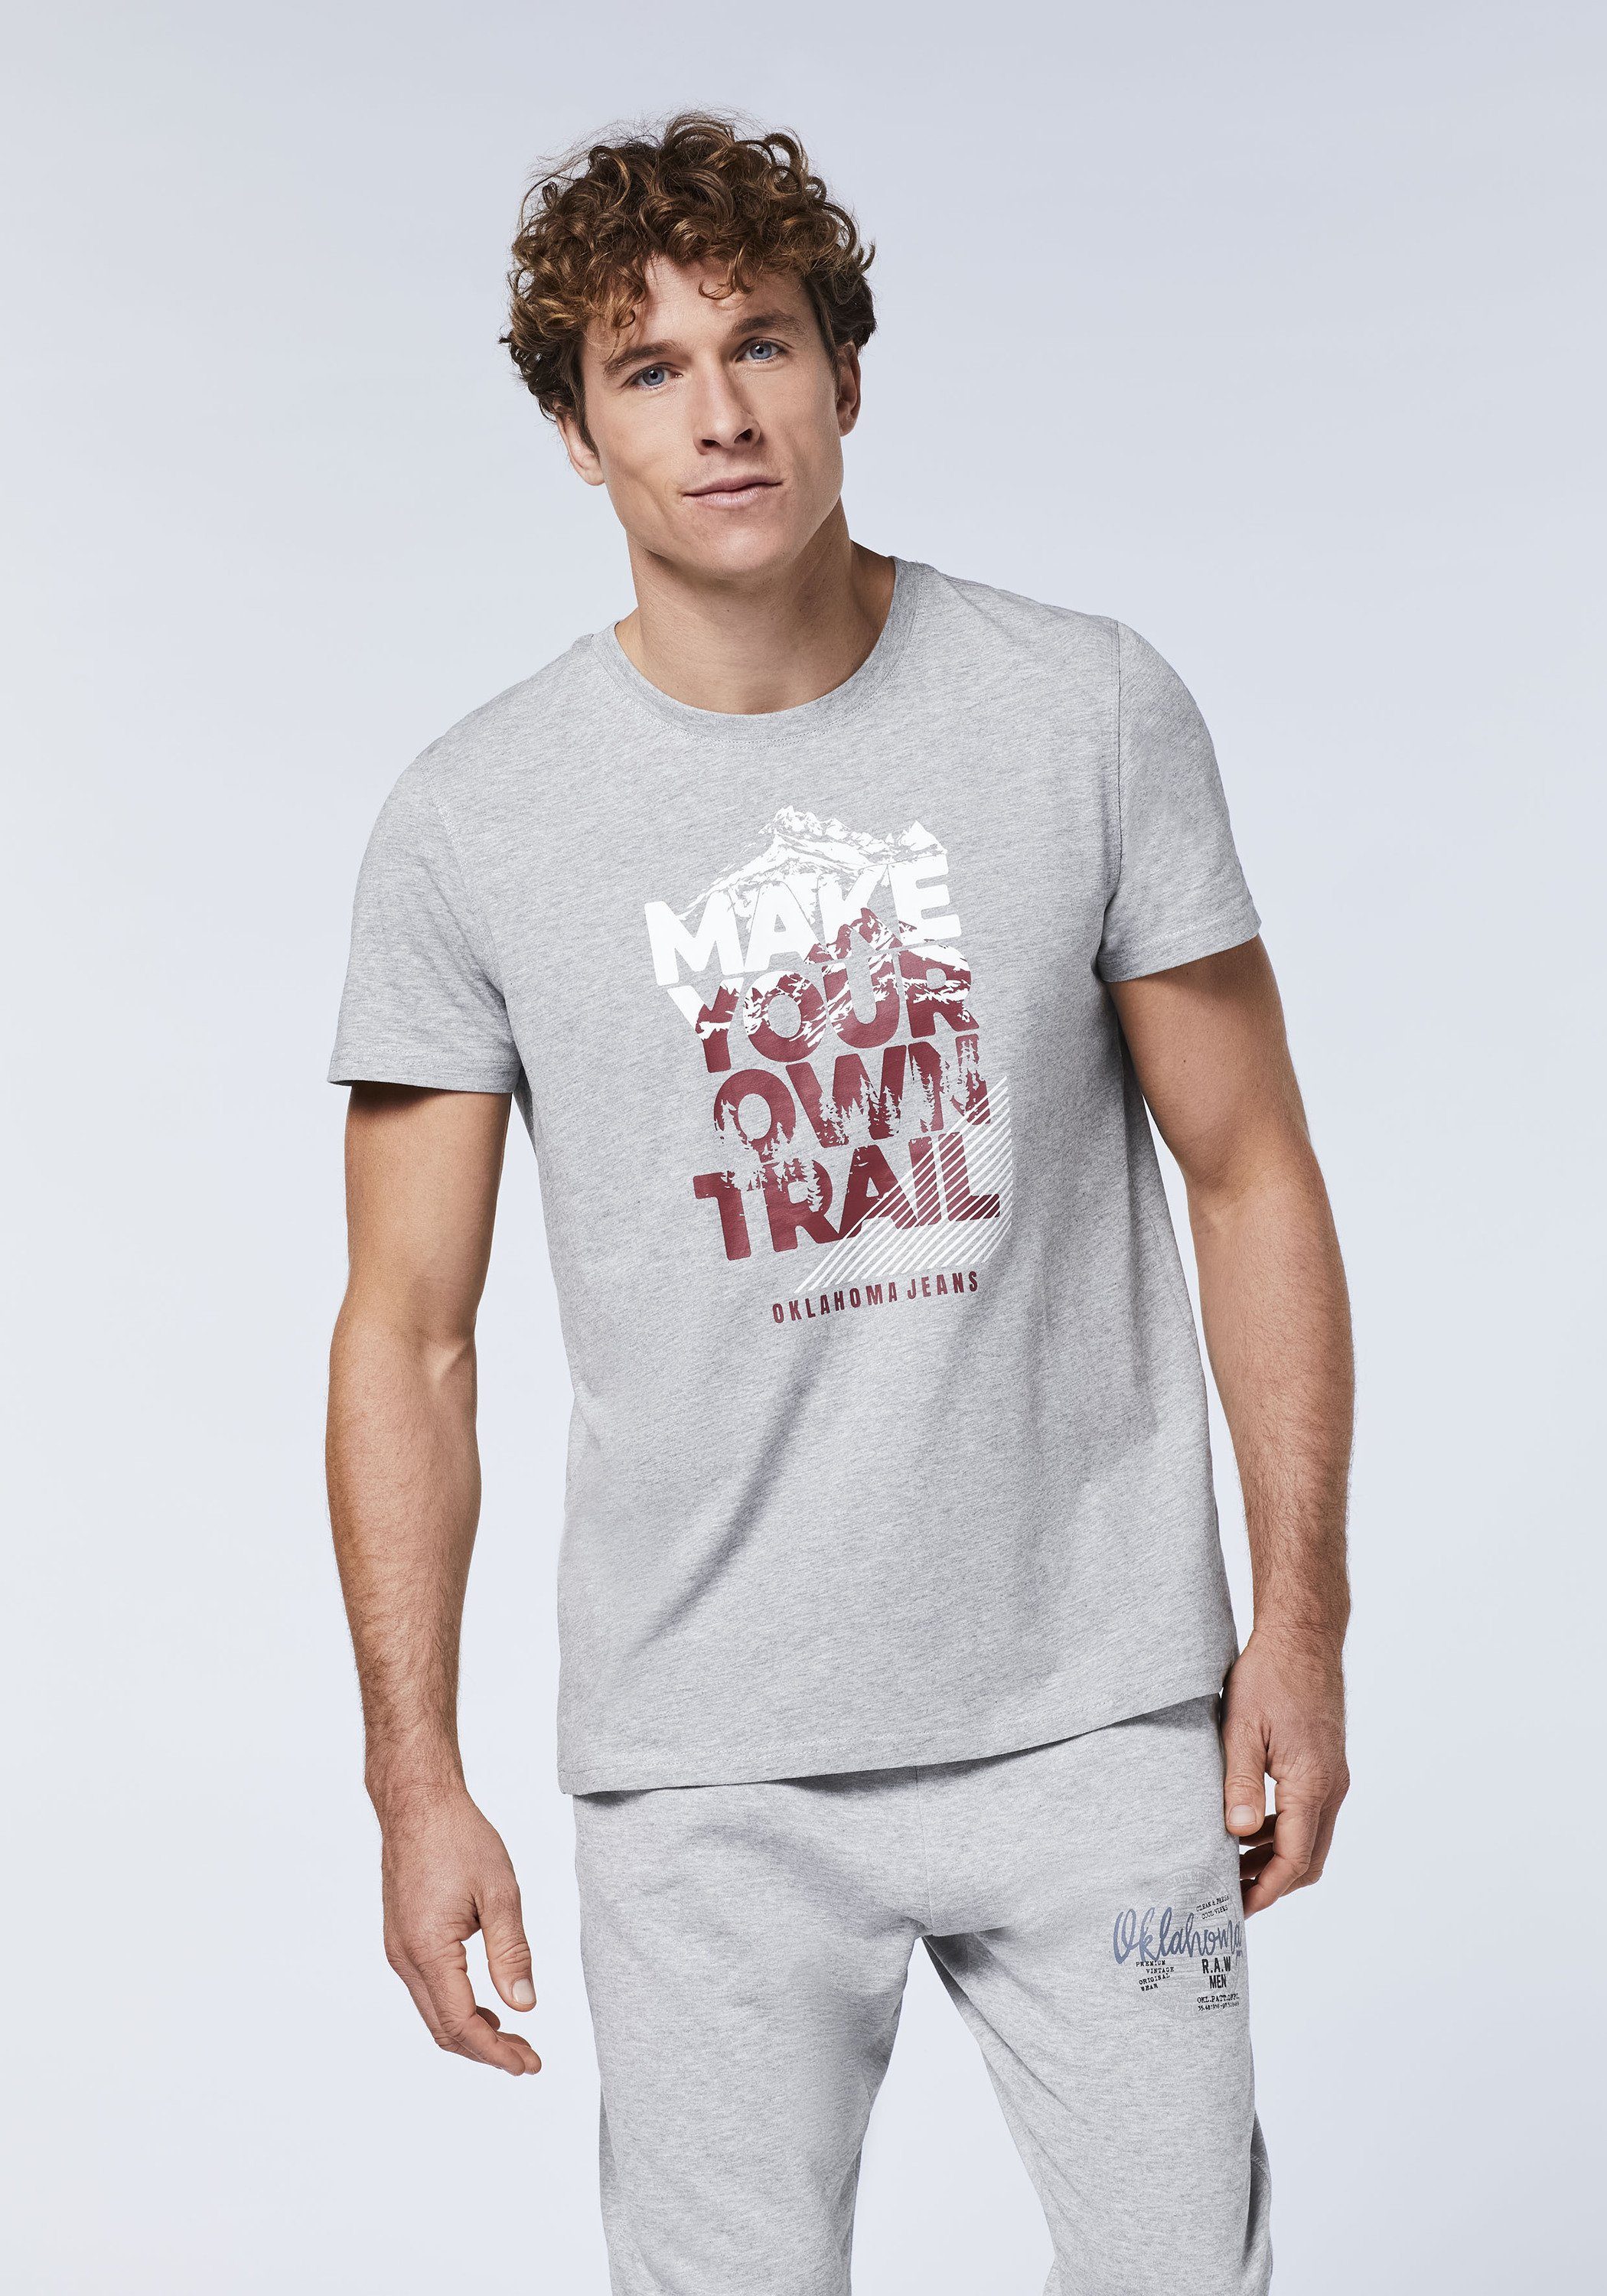 Schriftzug Mountain-Look Melange Neutral Print-Shirt im 17-4402M Oklahoma Jeans Gray mit